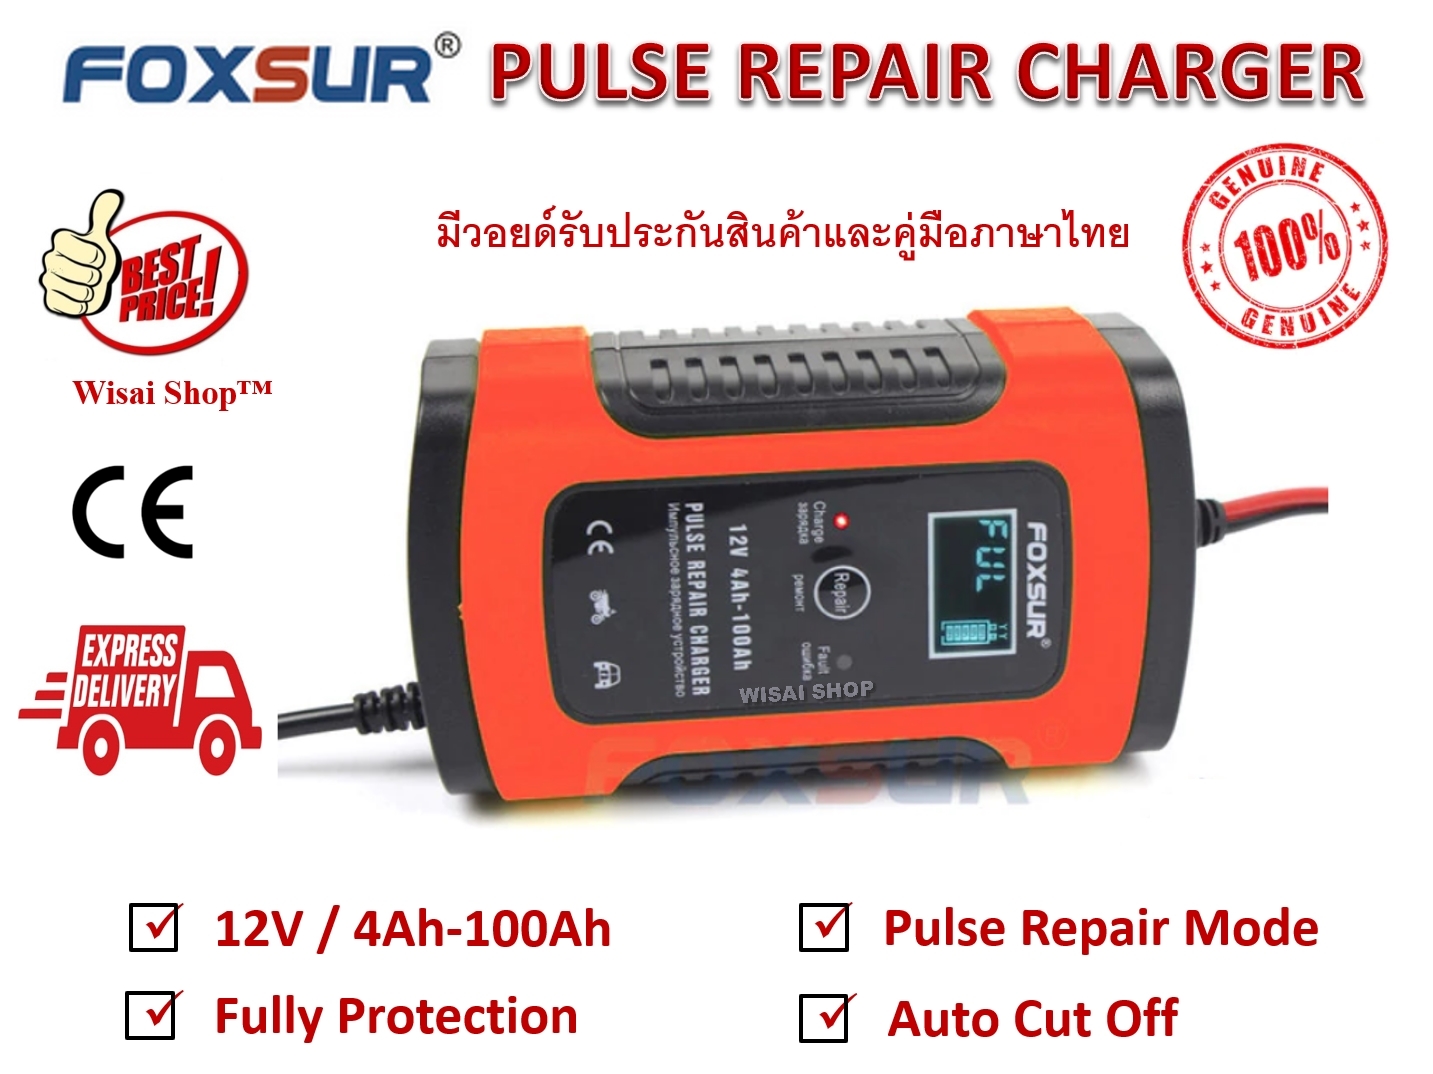 FOXSUR เครื่องชาร์จ 12V อัจฉริยะและซ่อมแบตเตอรี่ Pulse Repair Battery Charger 12V 4-100Ah รุ่น FBC1205D พร้อมคู่มือภาษาไทยและมีการรับประกัน